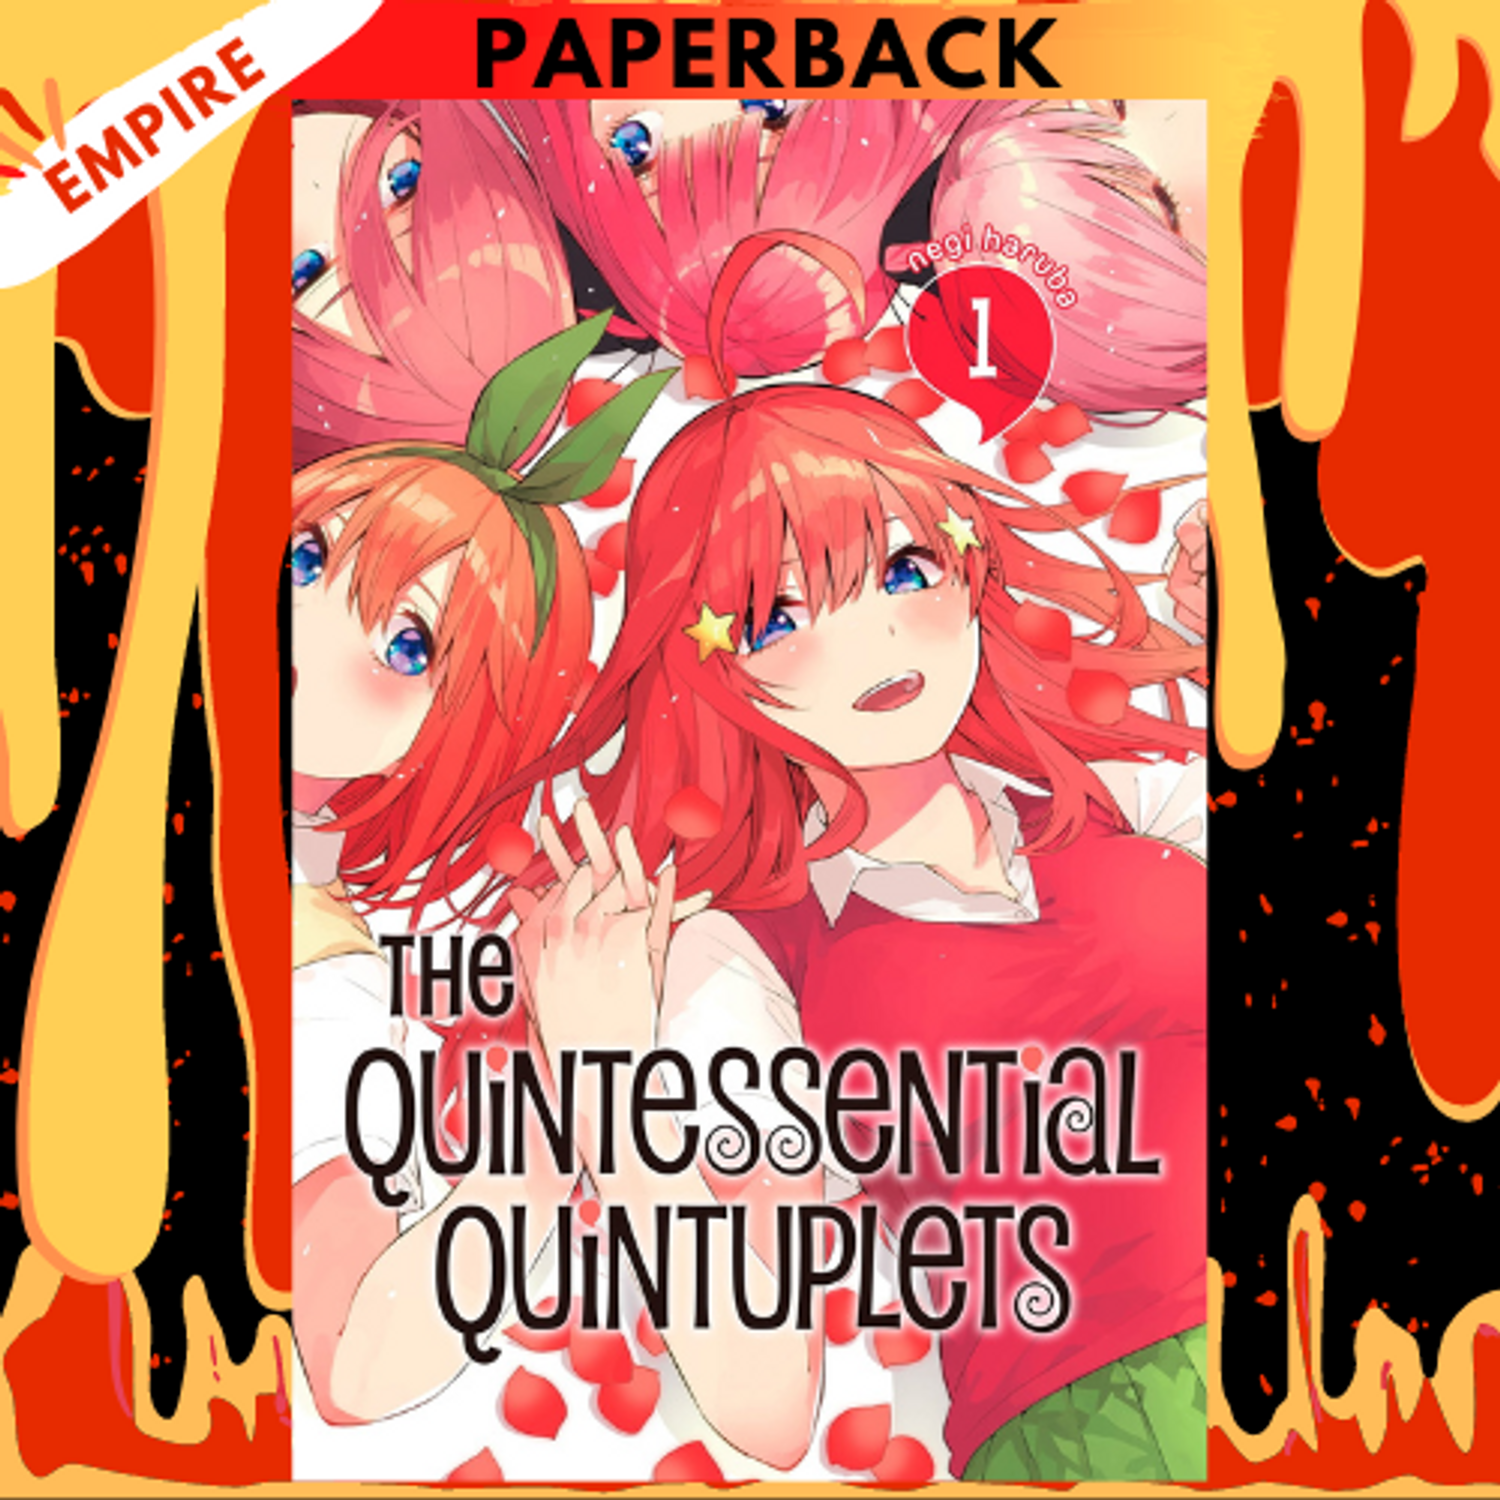 The Quintessential Quintuplets, Volume 3 by Negi Haruba, Paperback